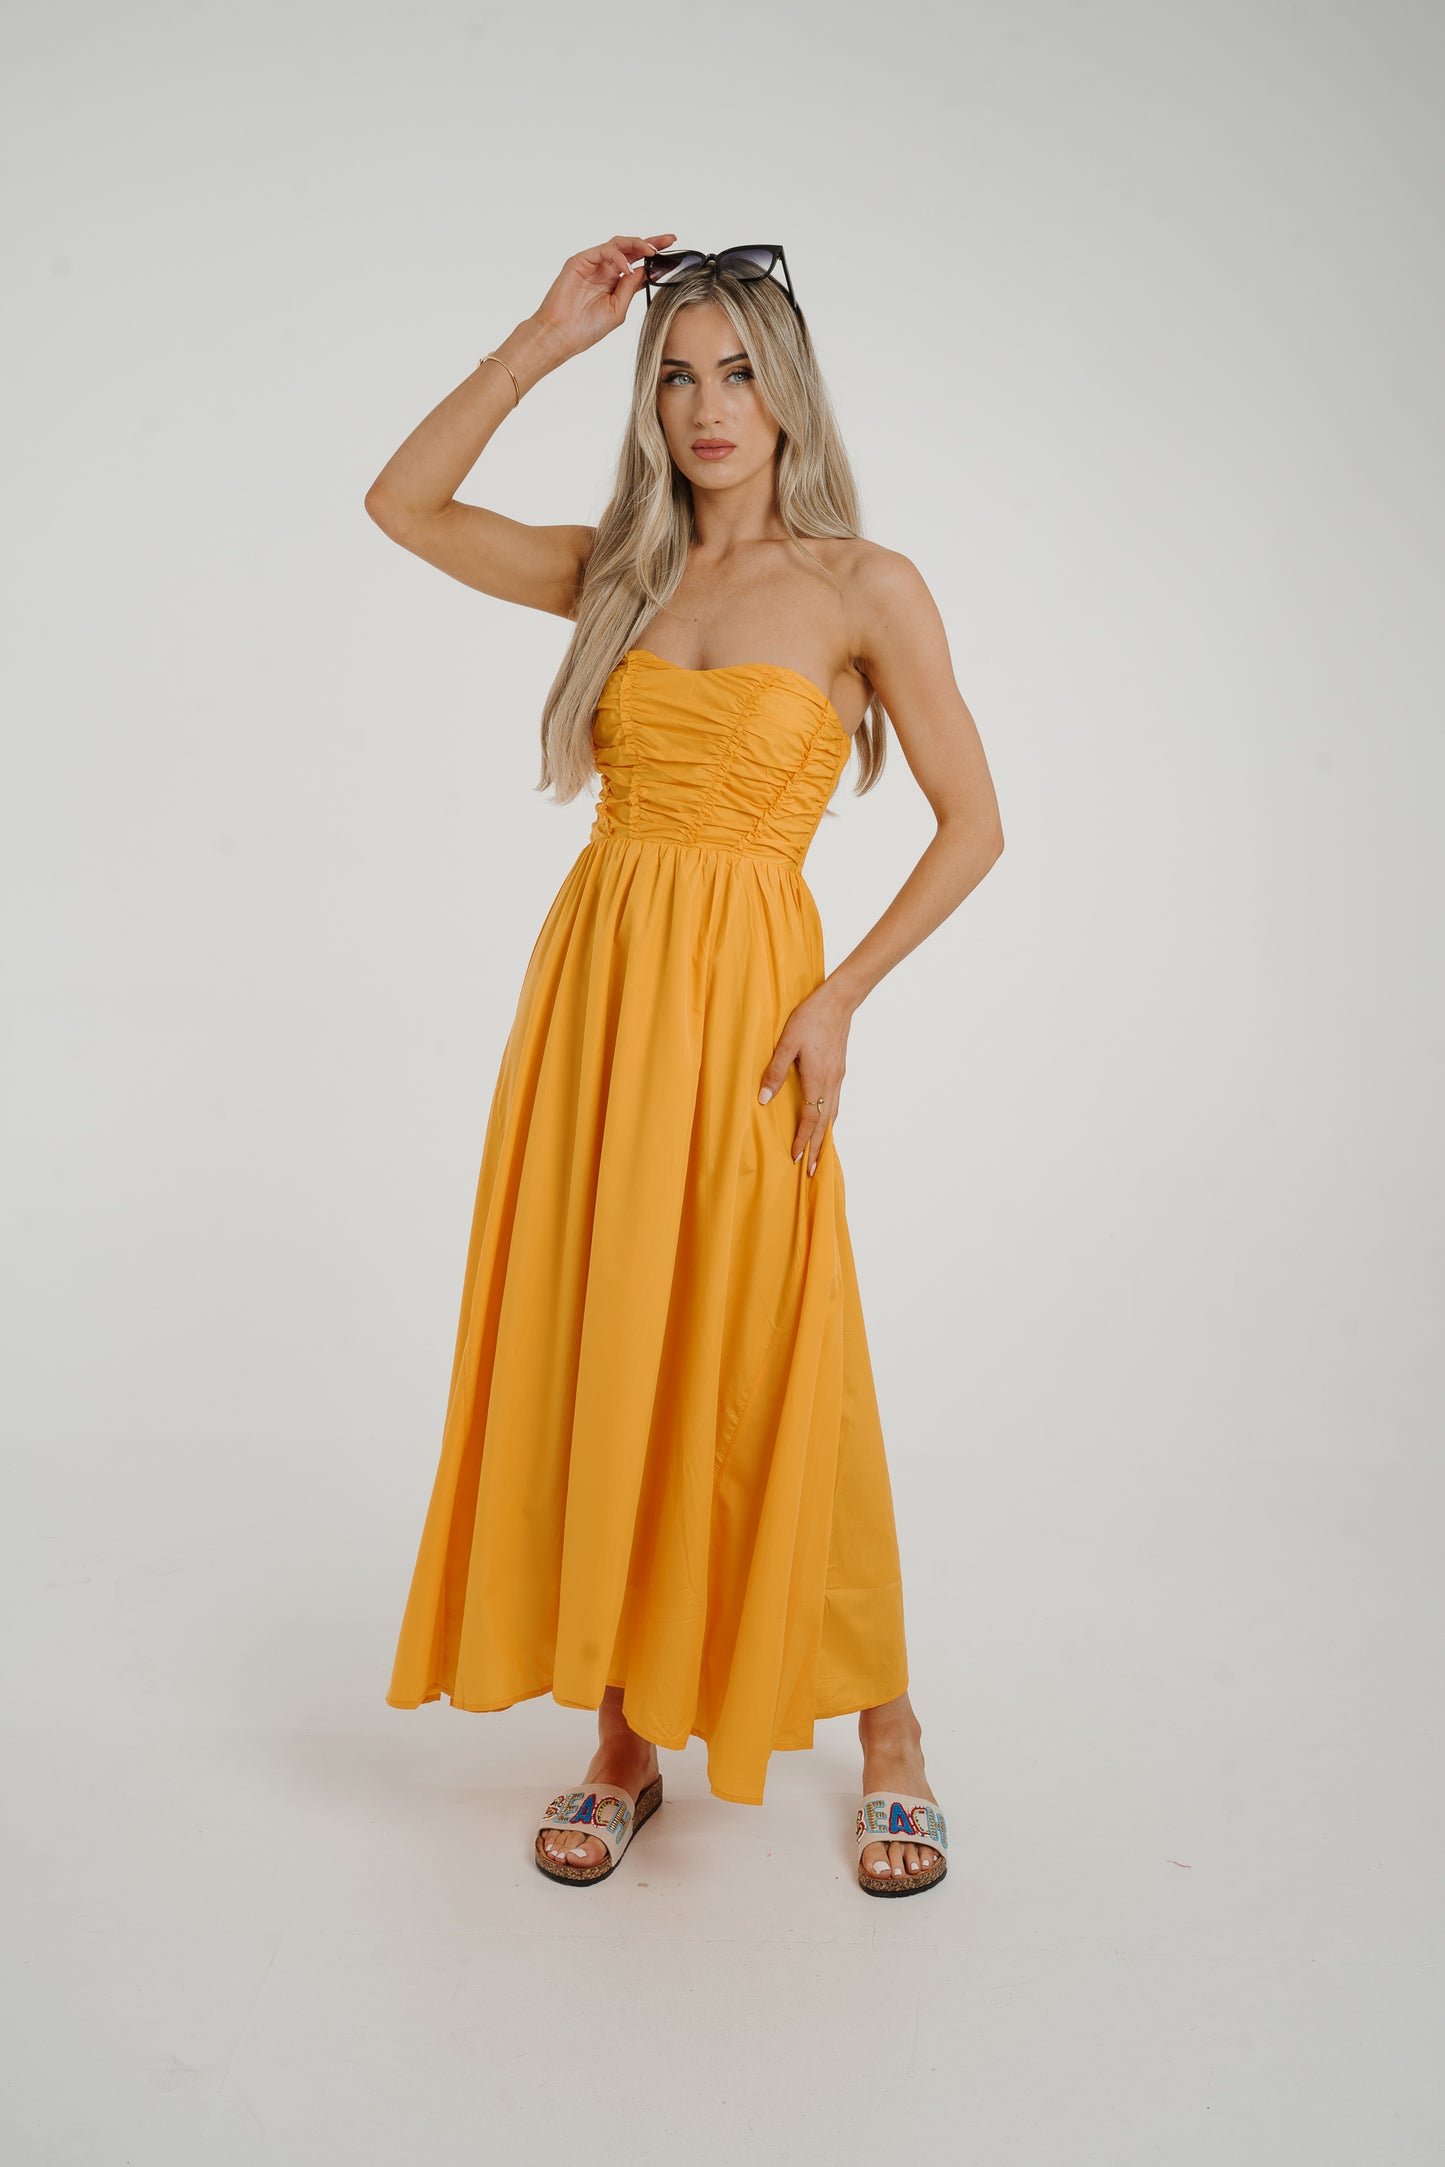 Caitlyn Corset Style Dress In Orange